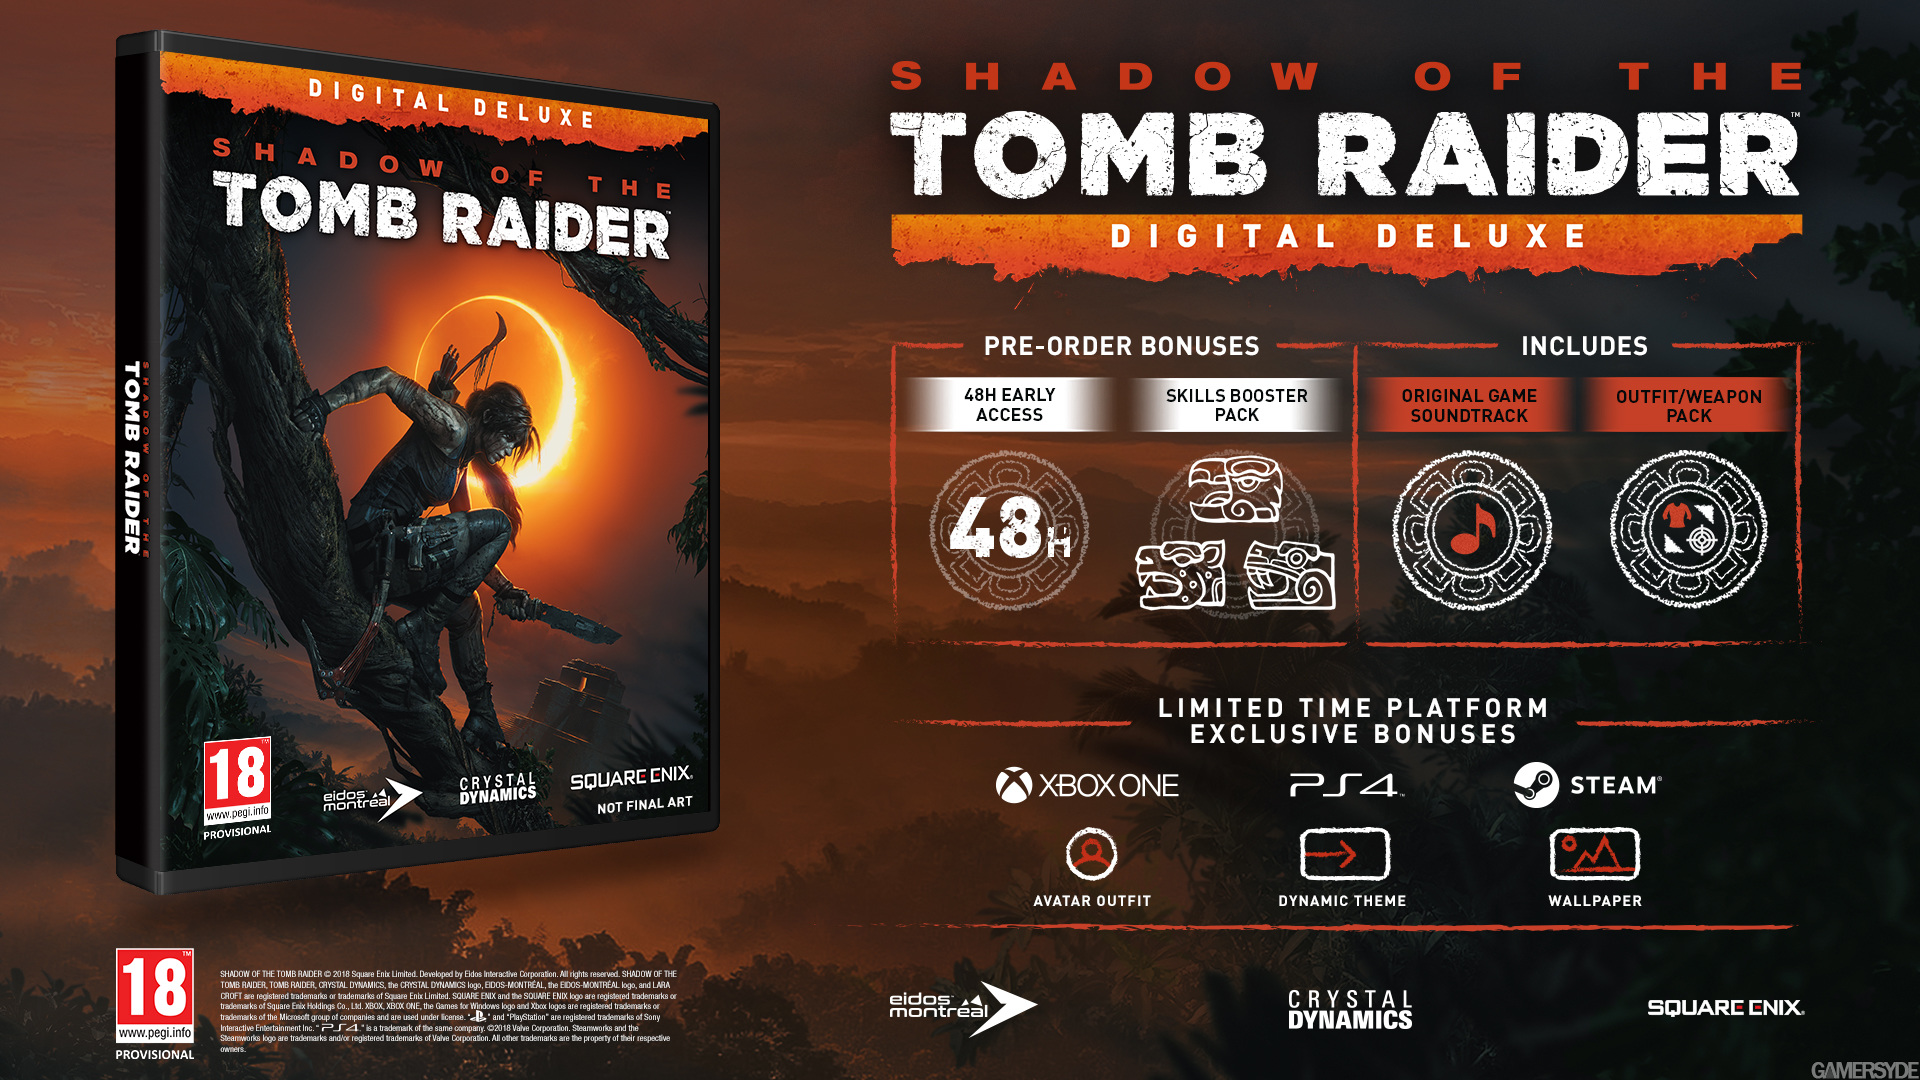 Tomb raider ps4 купить. Shadow of the Tomb Raider ps4. Shadow of the Tomb Raider ps4 диск. Shadow of the Tomb Raider ps4 обложка. Shadow of the Tomb Raider Xbox one диск.